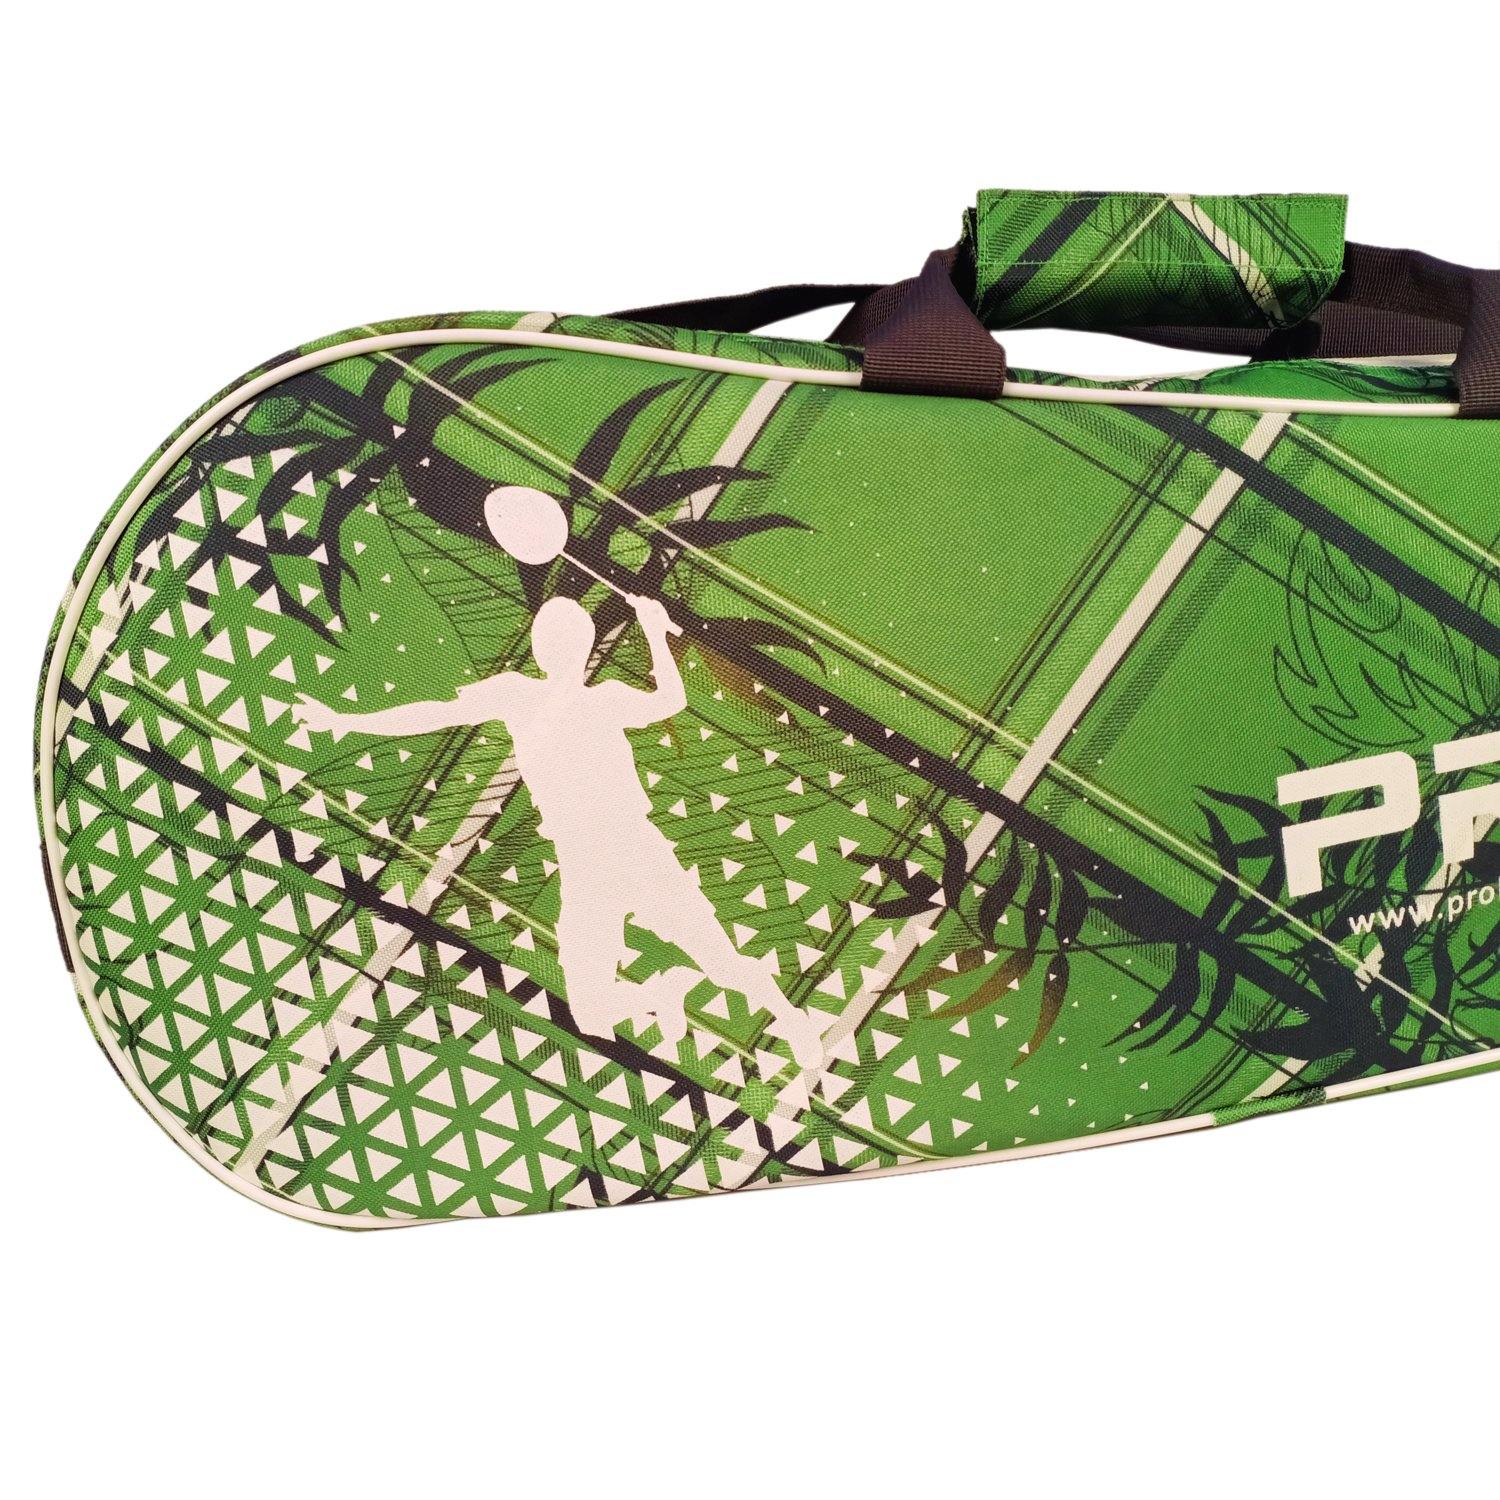 Prokick Badminton Kitbag with Double Zipper Compartments - Green Graffiti - Best Price online Prokicksports.com